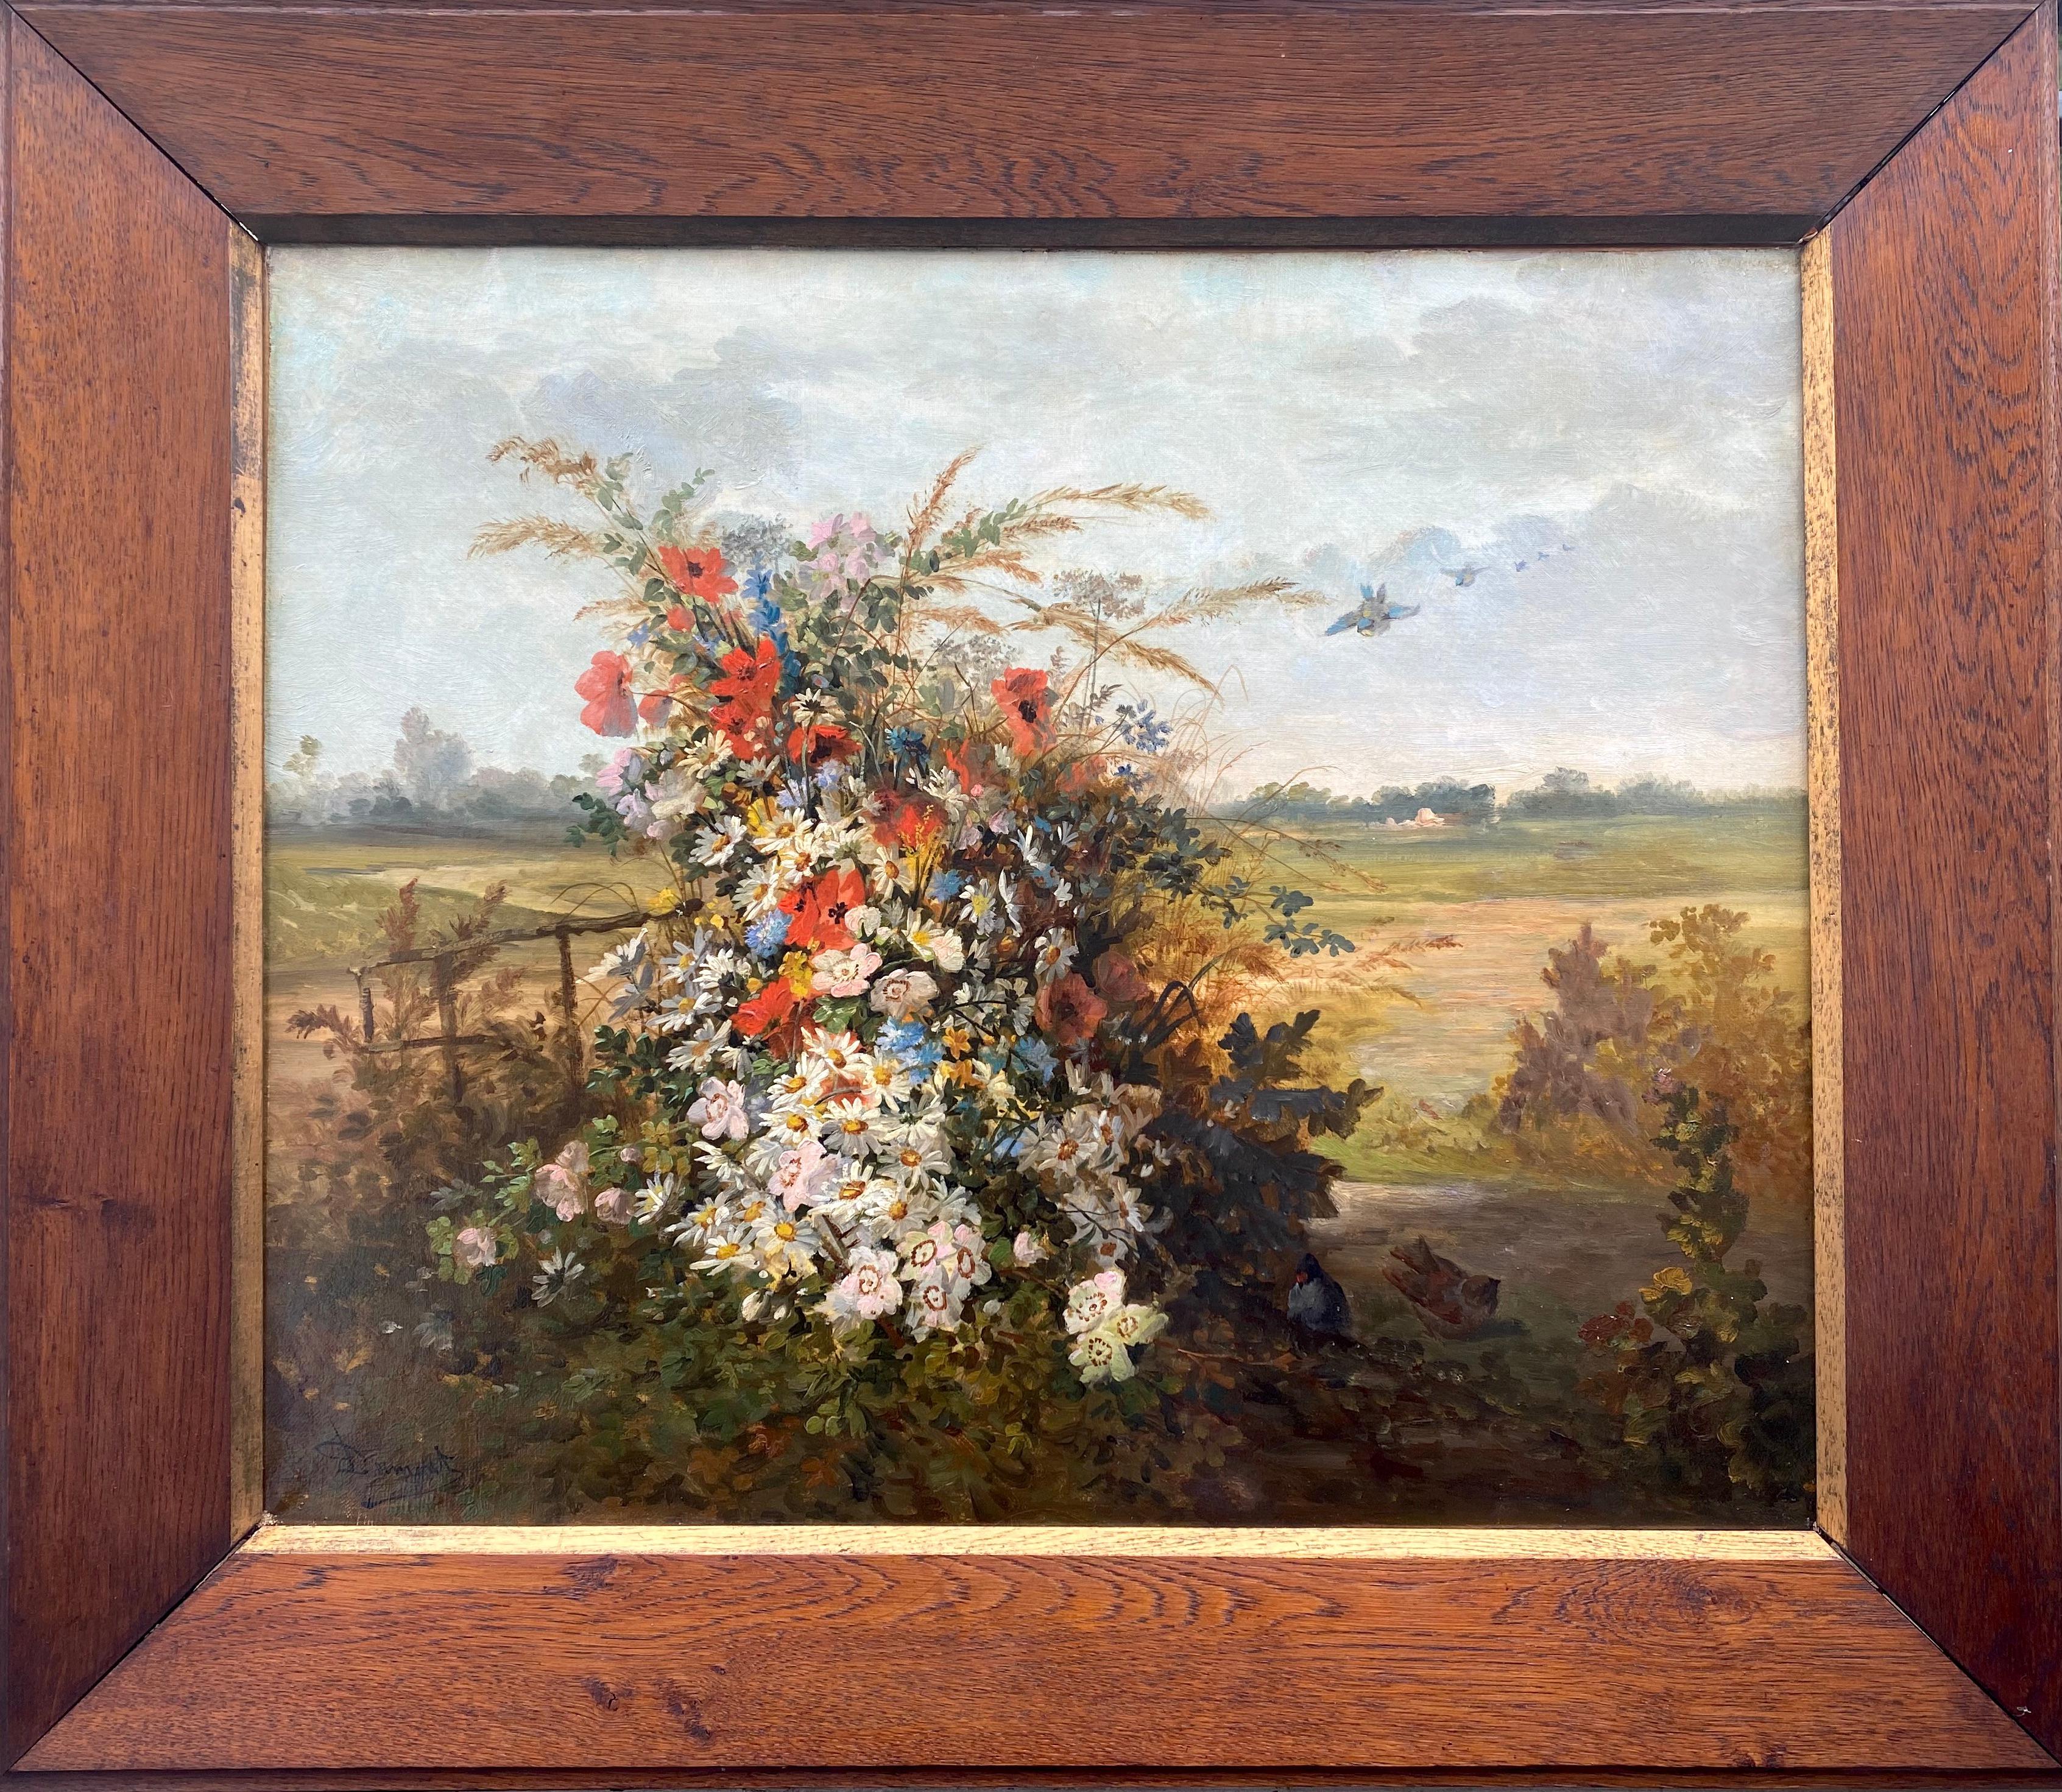 Jean Claude Dumont Landscape Painting - Field flowers: exuberant floral still life in a rustic landscape country scene